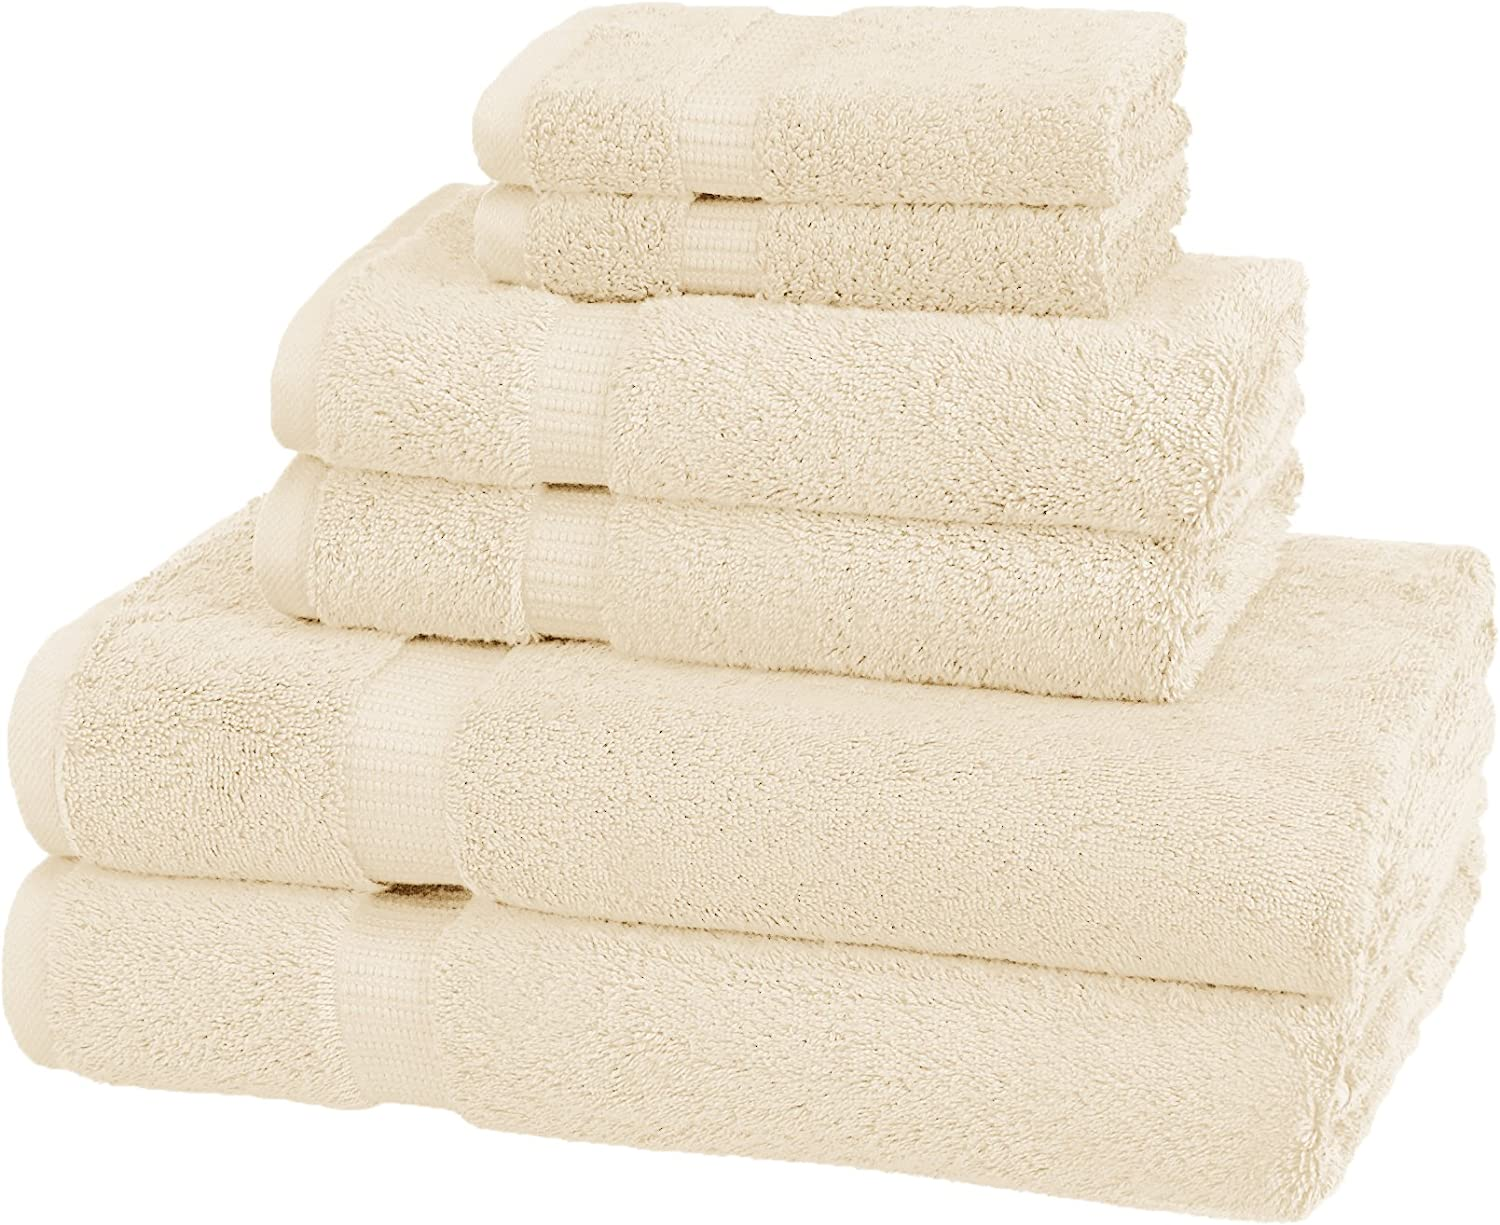 6-Pc Pinzon Organic Cotton Bathroom Towels Set (Ivory) $13.70